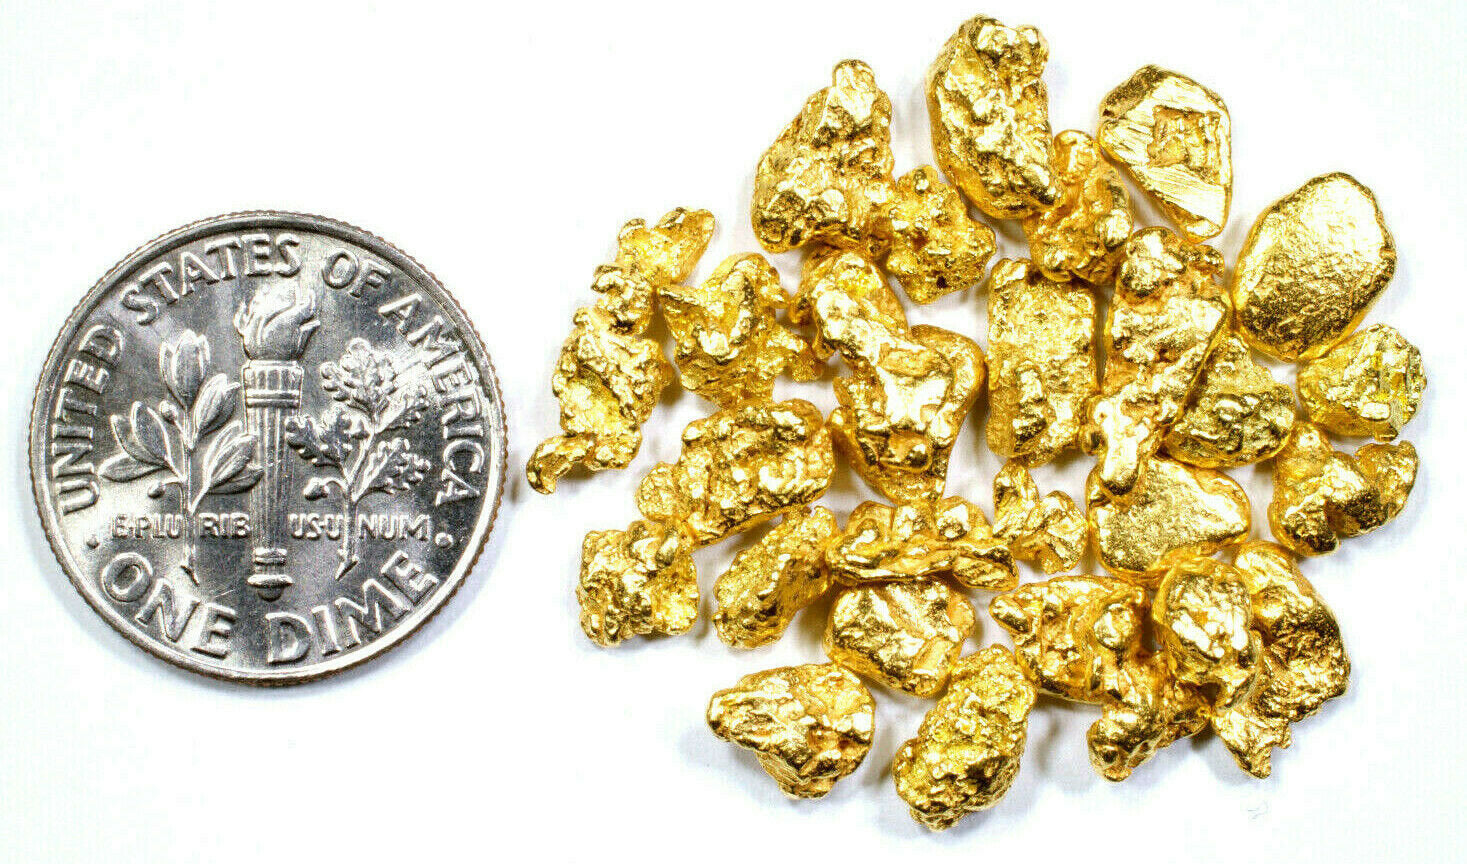 3.000 GRAMS ALASKAN YUKON BC NATURAL PURE GOLD NUGGETS #6 MESH WITH BOTTLE (#B600) - Liquidbullion